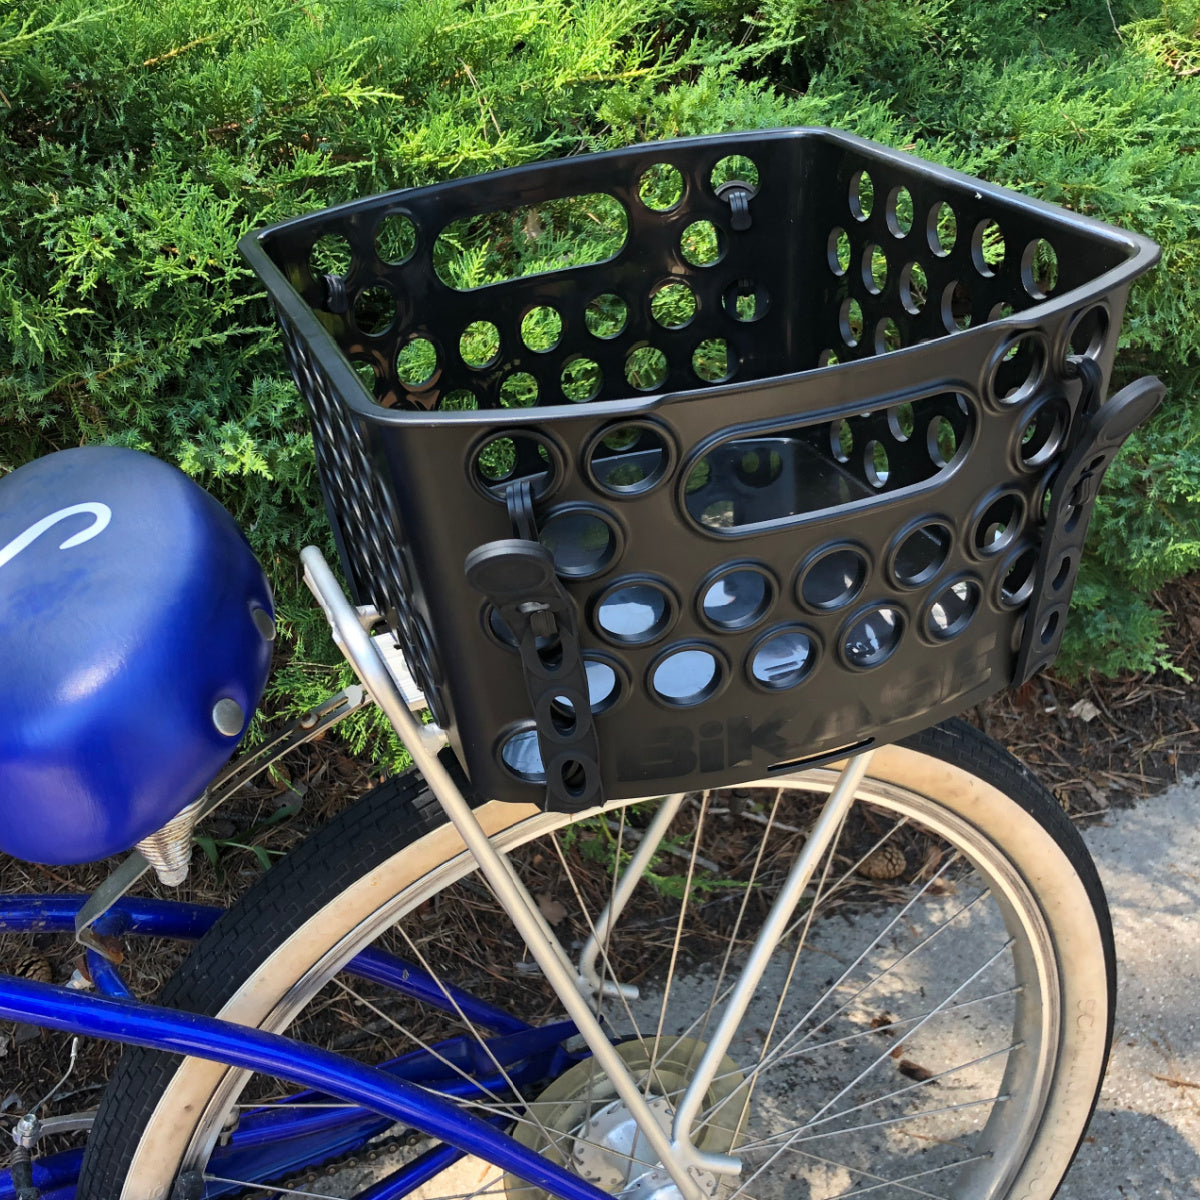 EBike Bicycle Basket, Dairyman Universal Rear Bicycle Basket, E-Bike Basket by AltGear LLC.